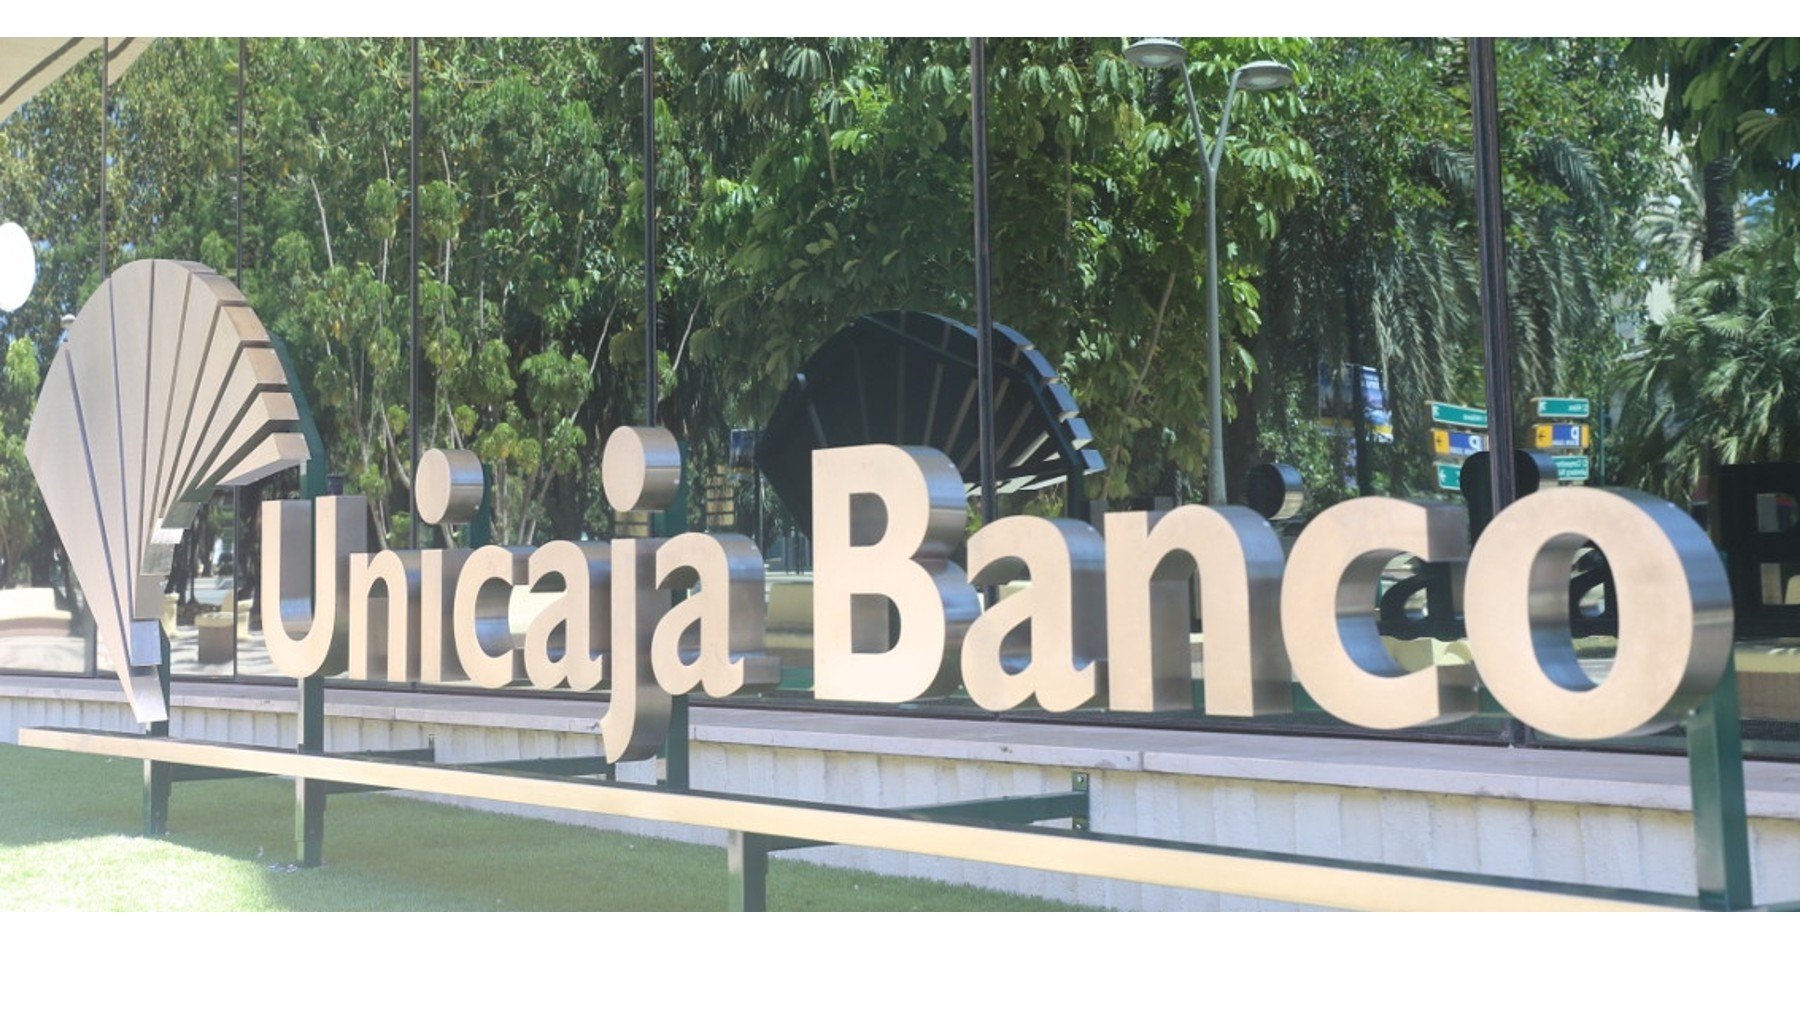 Sede de Unicaja Banco.